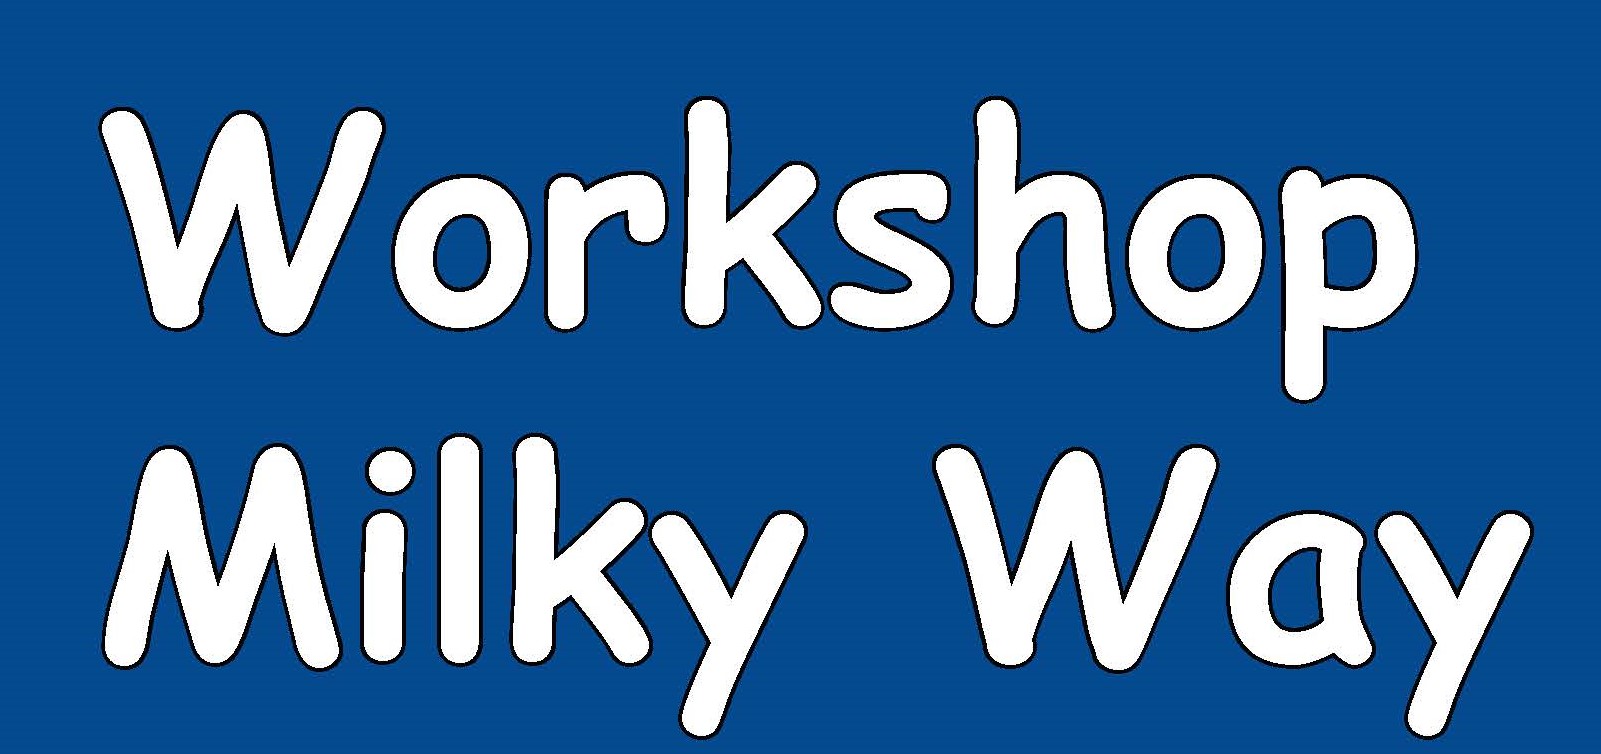 Workshop Milky Way